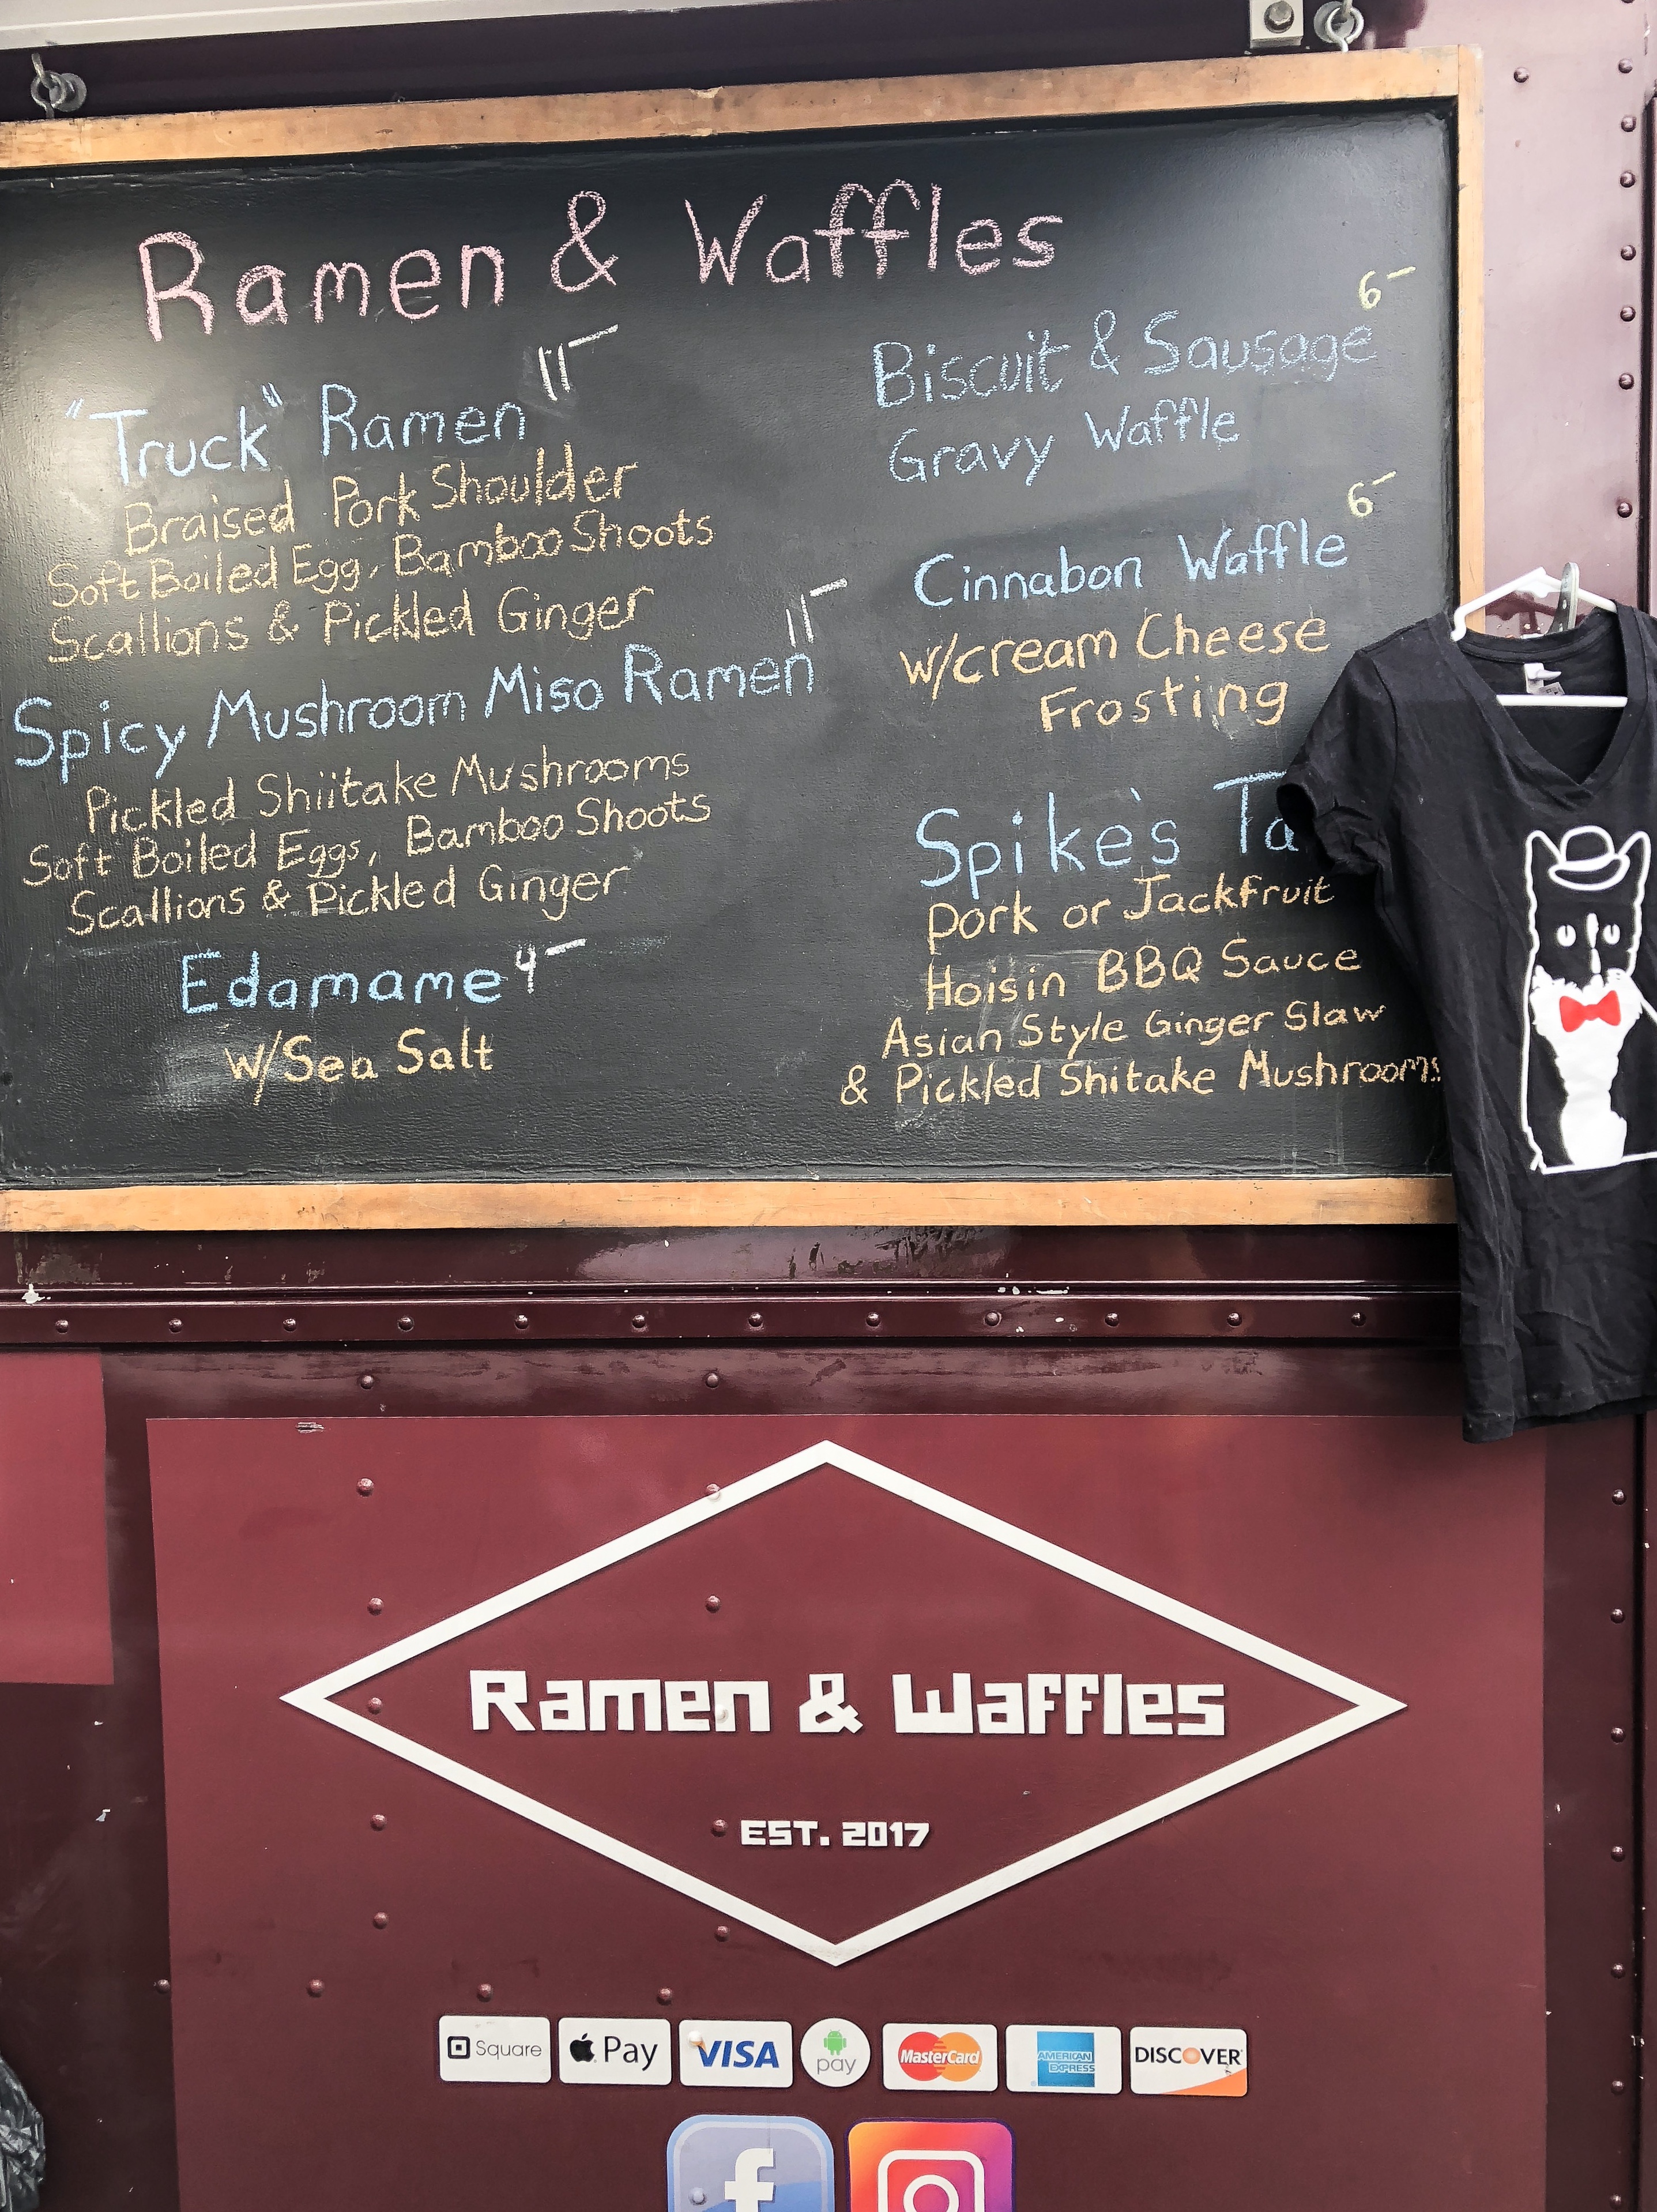 The Ramen and Waffles Menu